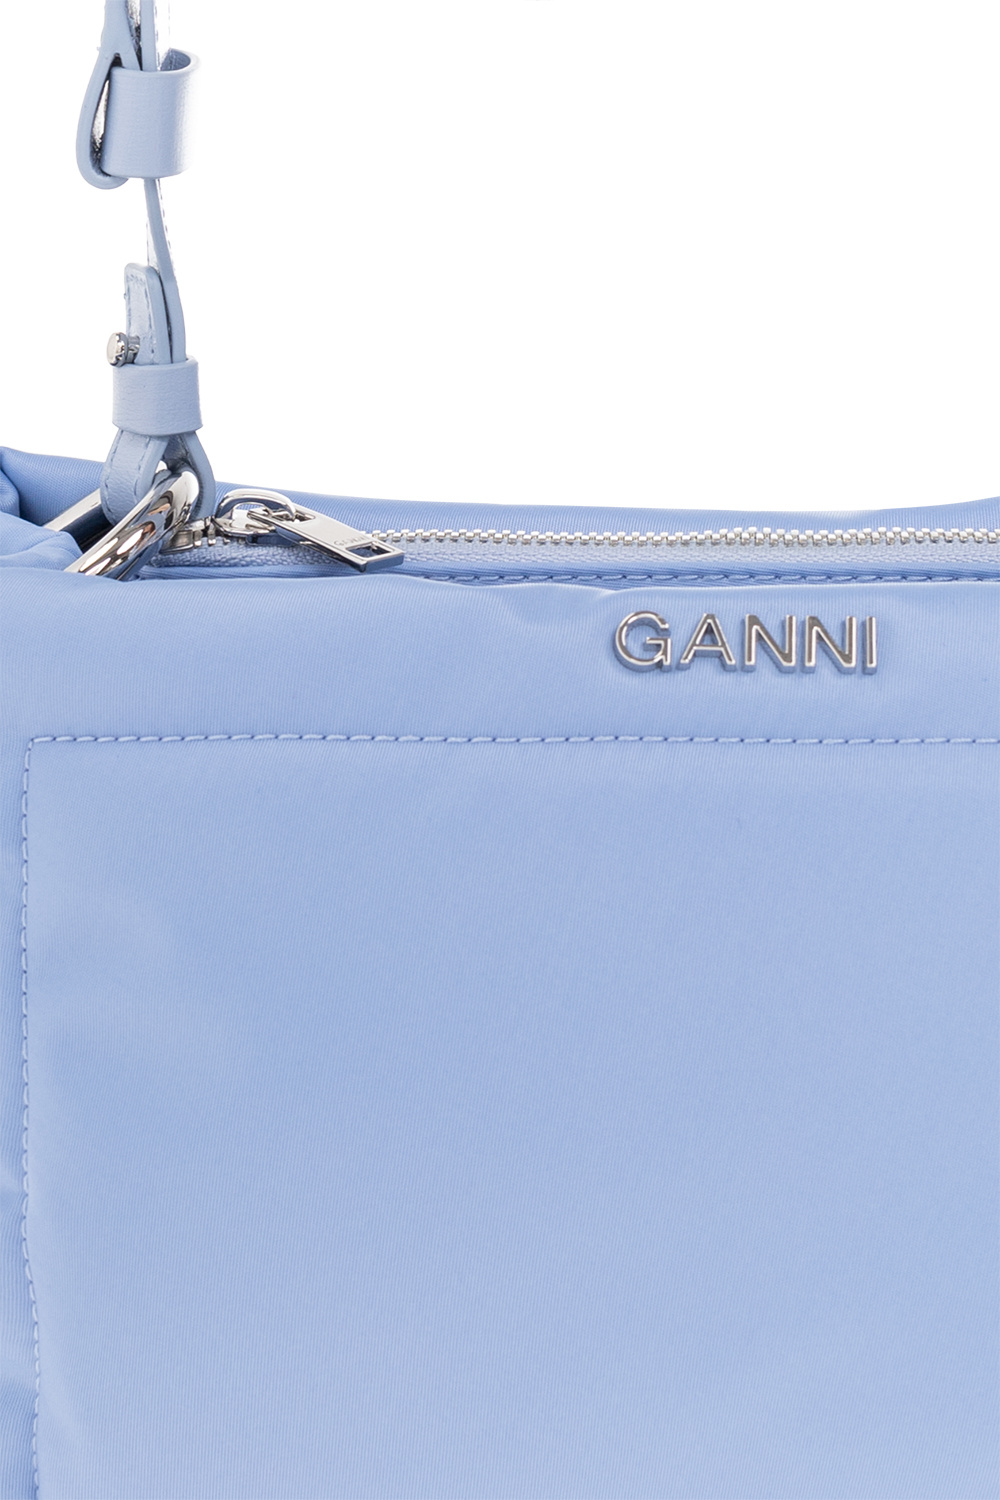 Ganni Pre-owned Epi Speedy 25 Bag